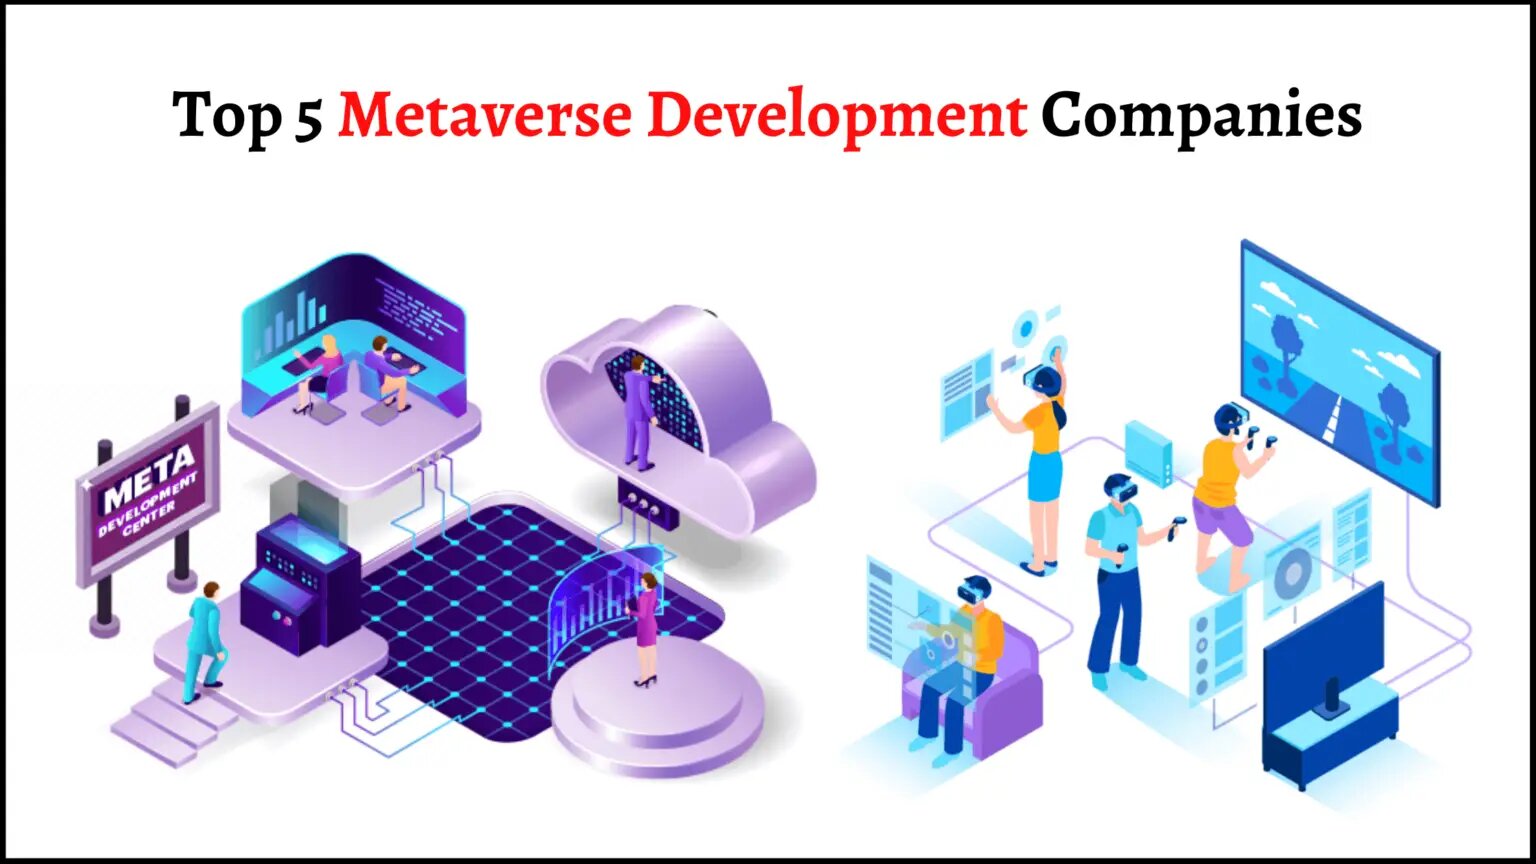 Top-5-Metaverse-Development-Companies-1-1-0c5e2ffe-1536x864